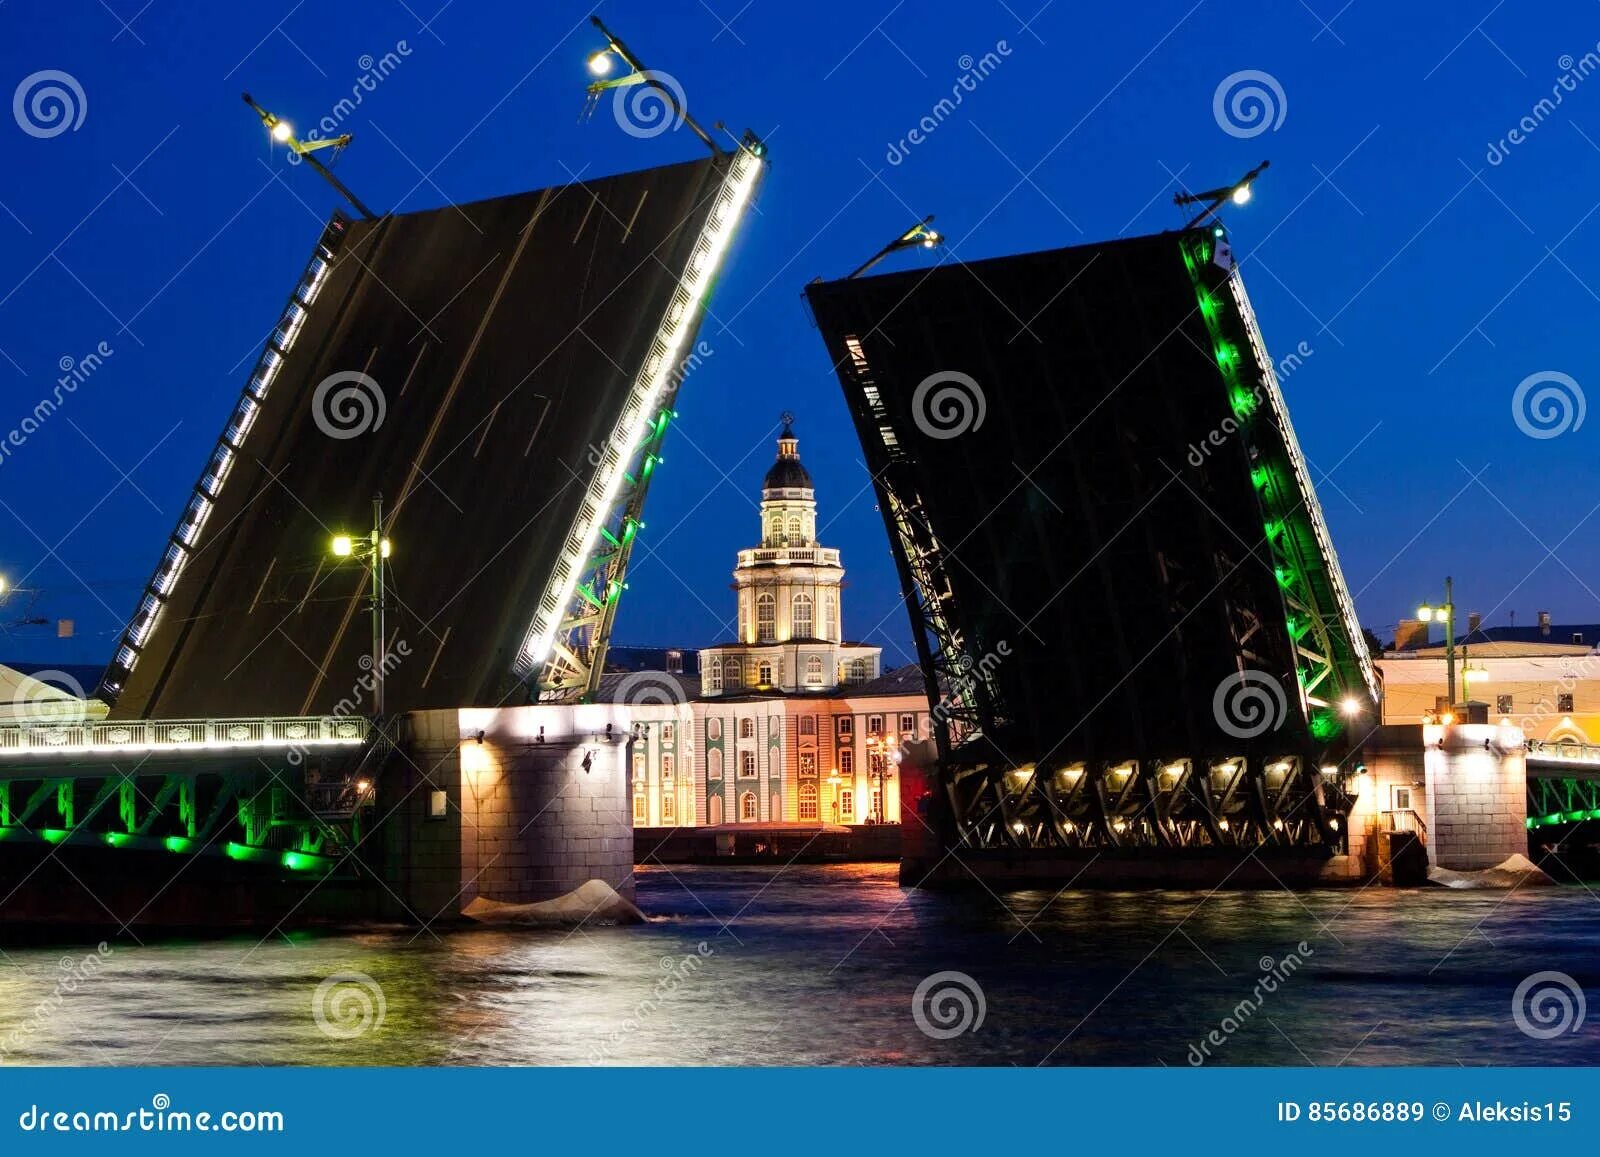 Дворцовый мост санкт петербург кратко. Кунсткамера Санкт-Петербург разводные мосты ночью. Разводной мост Кунсткамера. Разведённый Дворцовый мост Кунсткамера вектор. Дворцовый мост квартира.